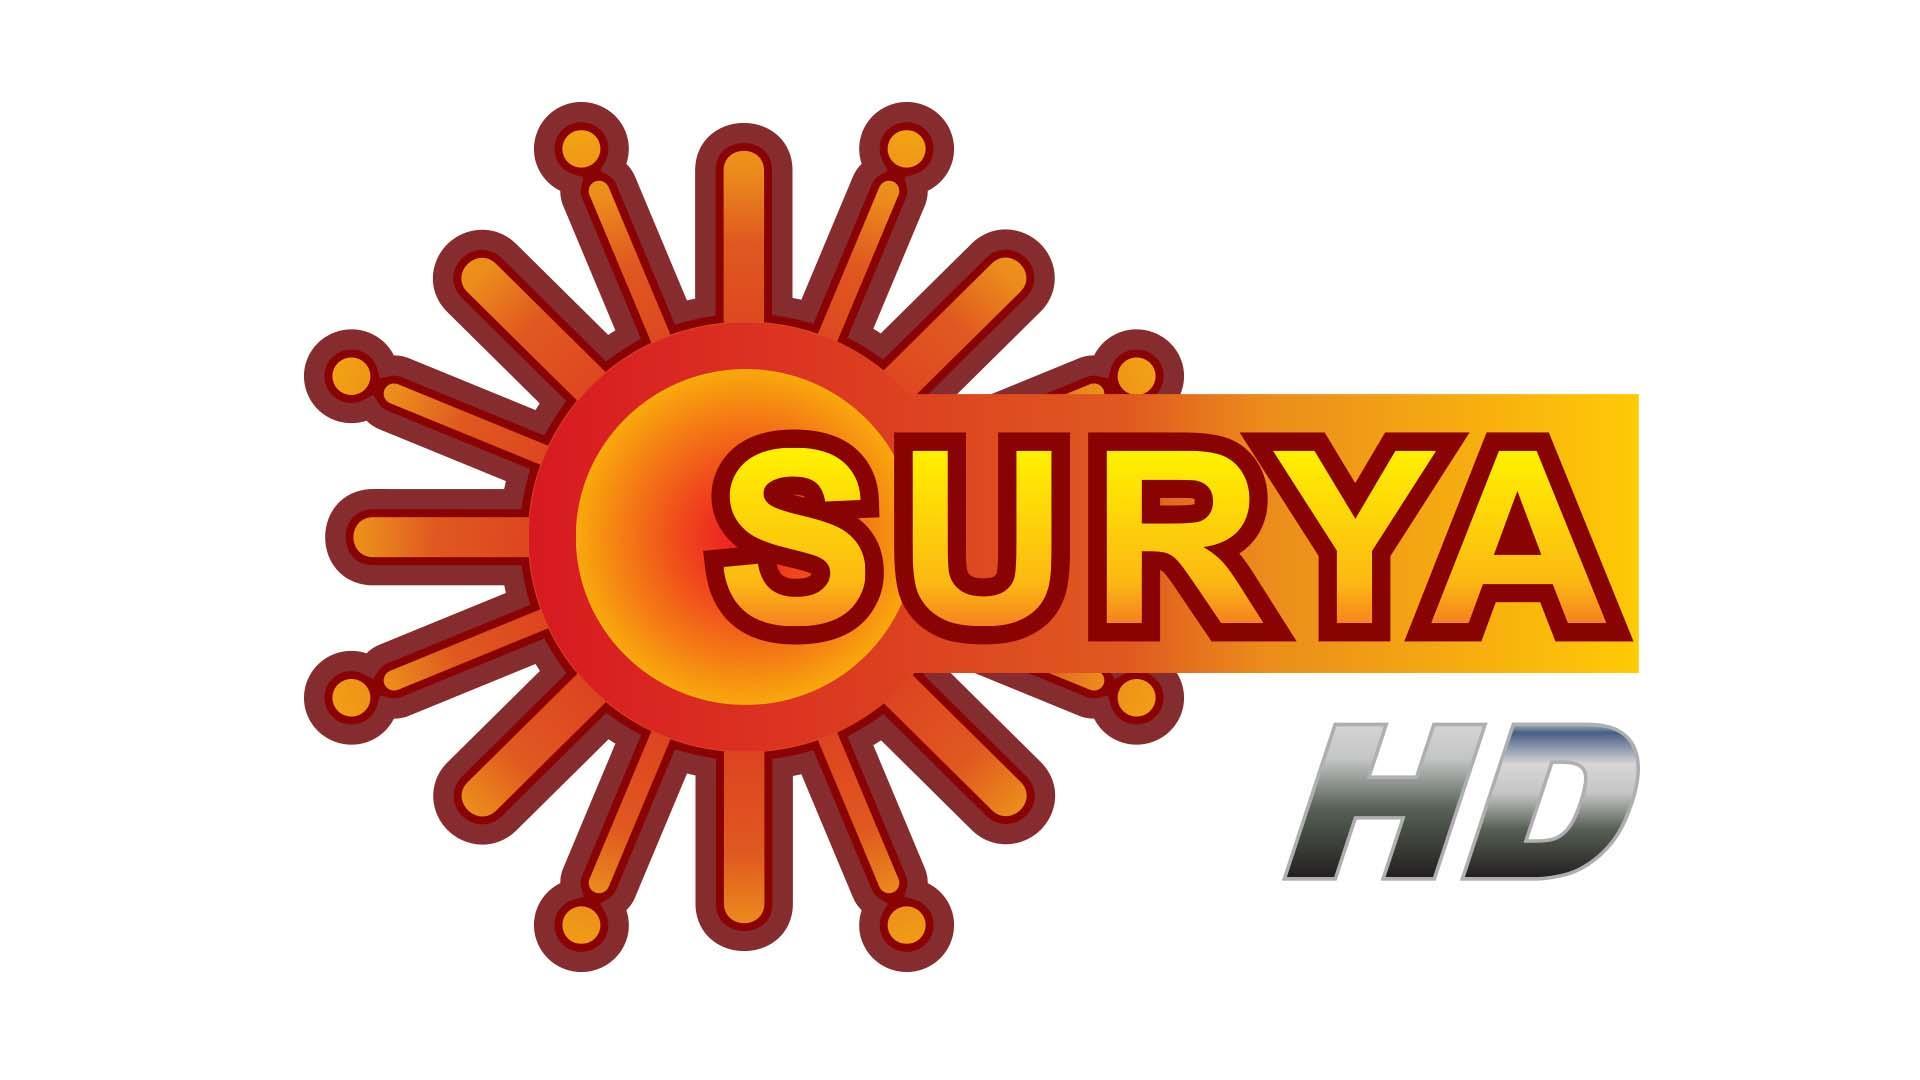 Surya TV HD